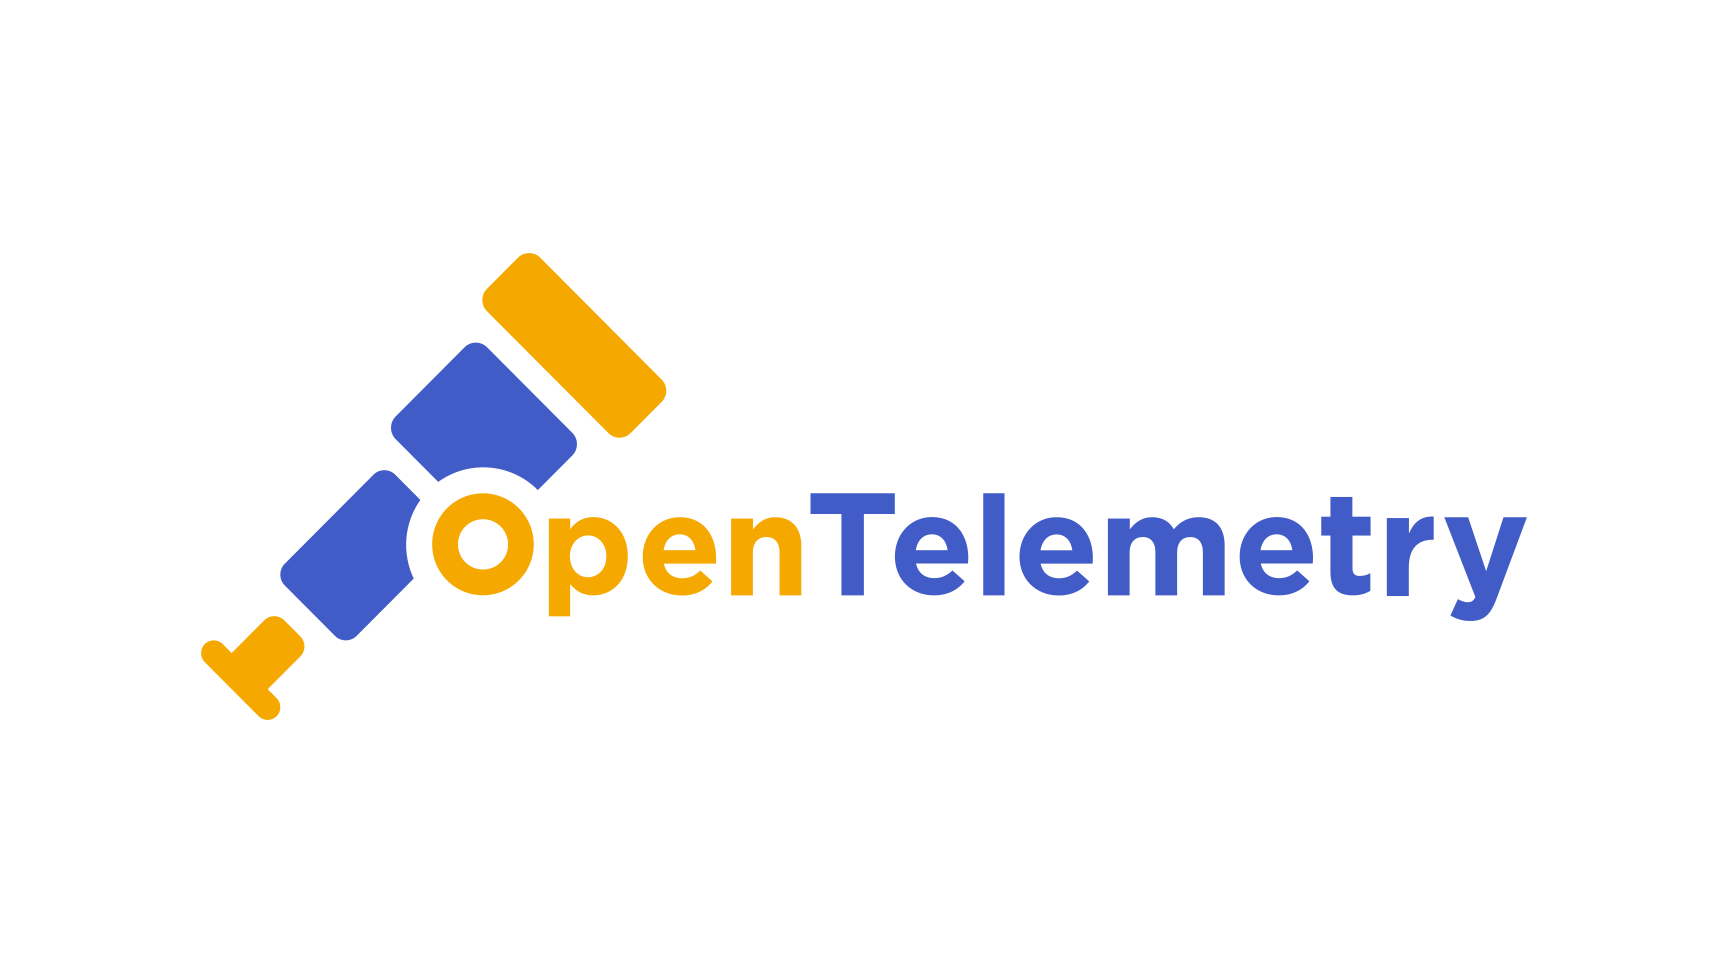 OpenTelemetry